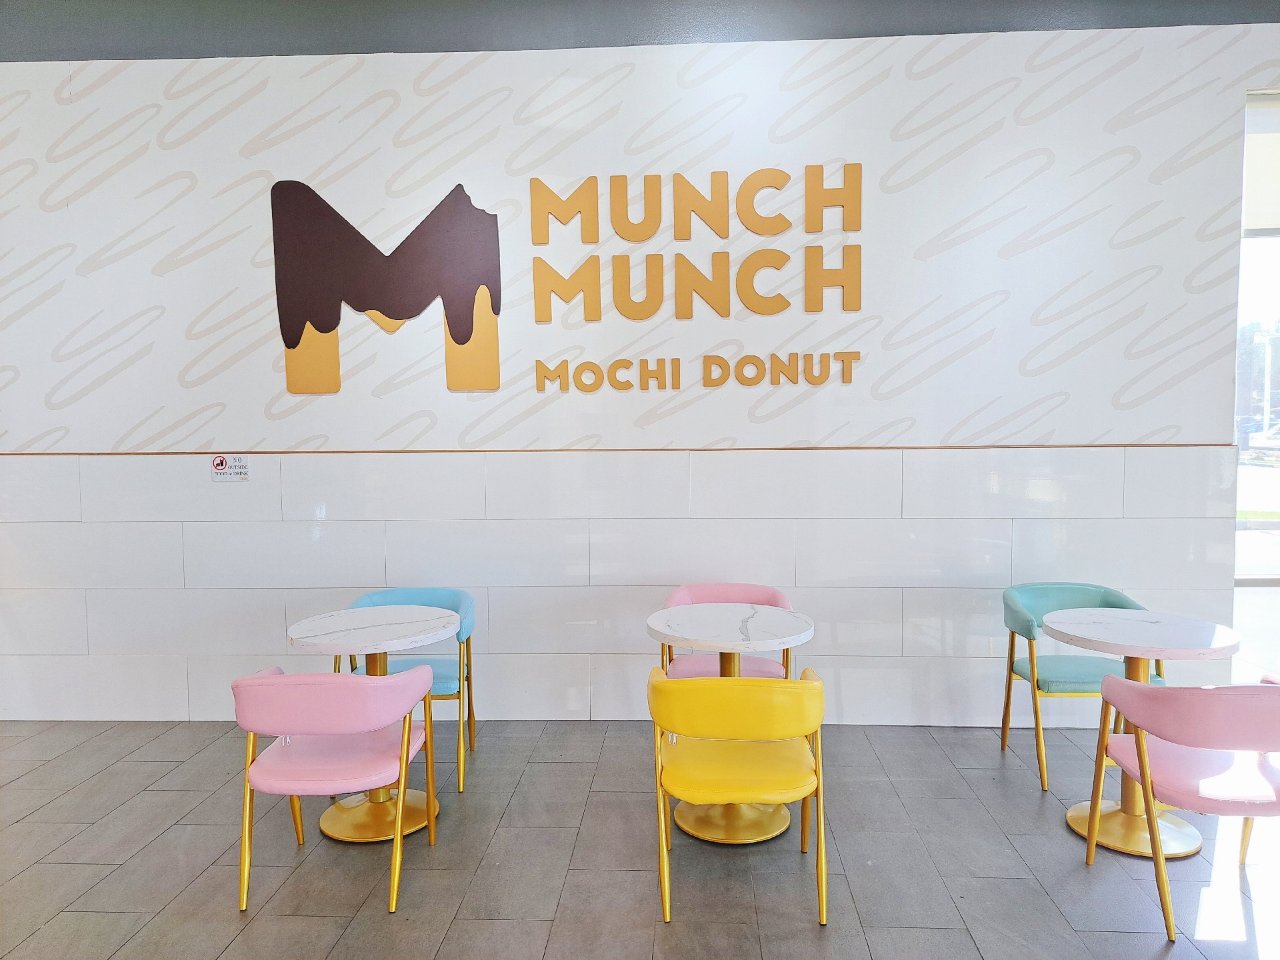 Munch Munch Mochi Do...